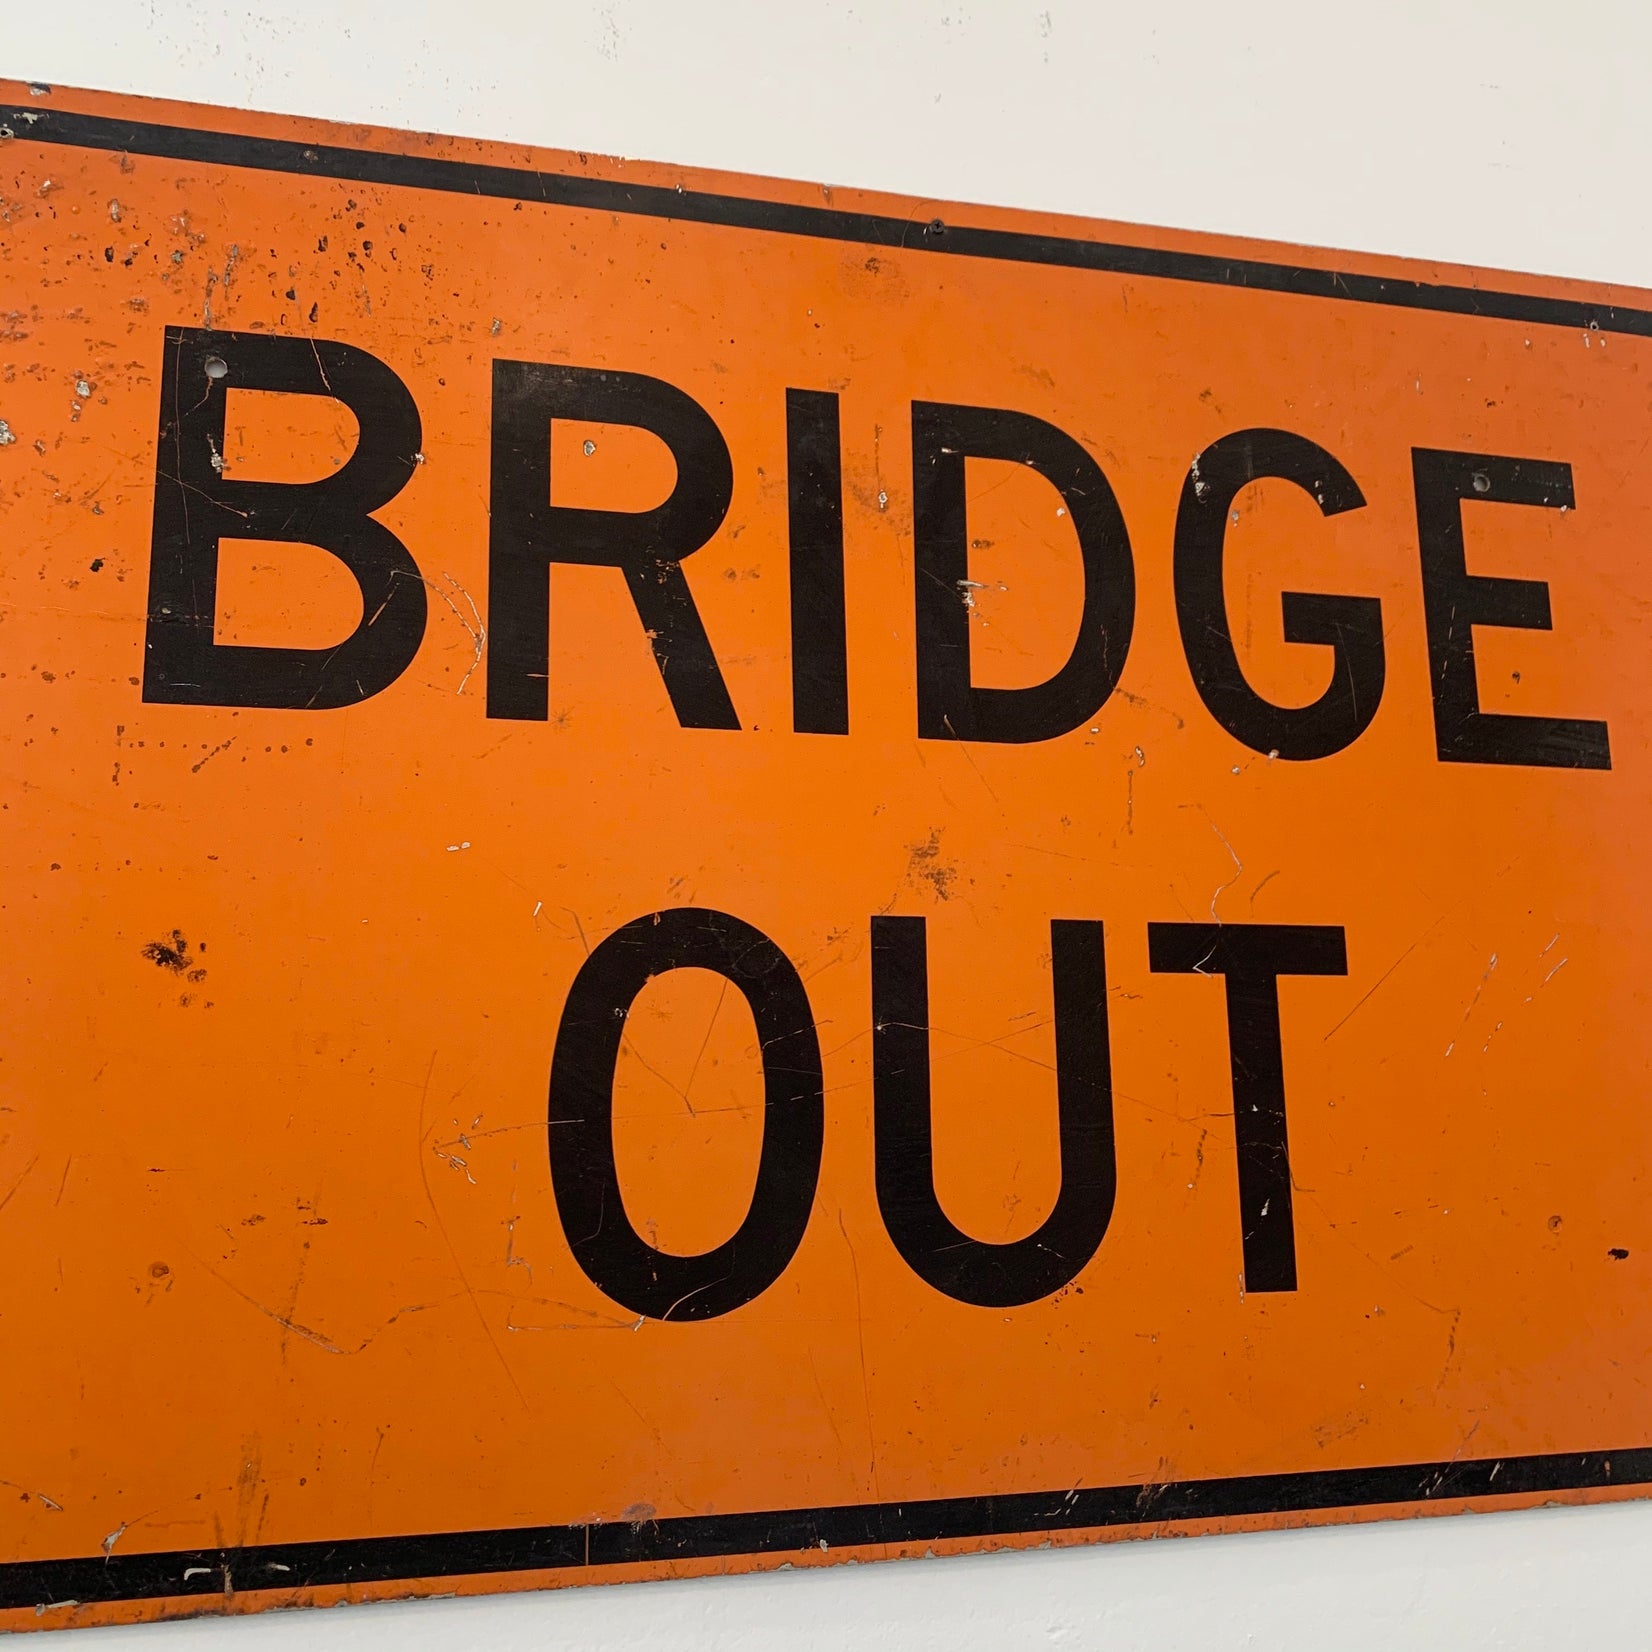 Orange 'BRIDGE OUT' Metal Highway Sign